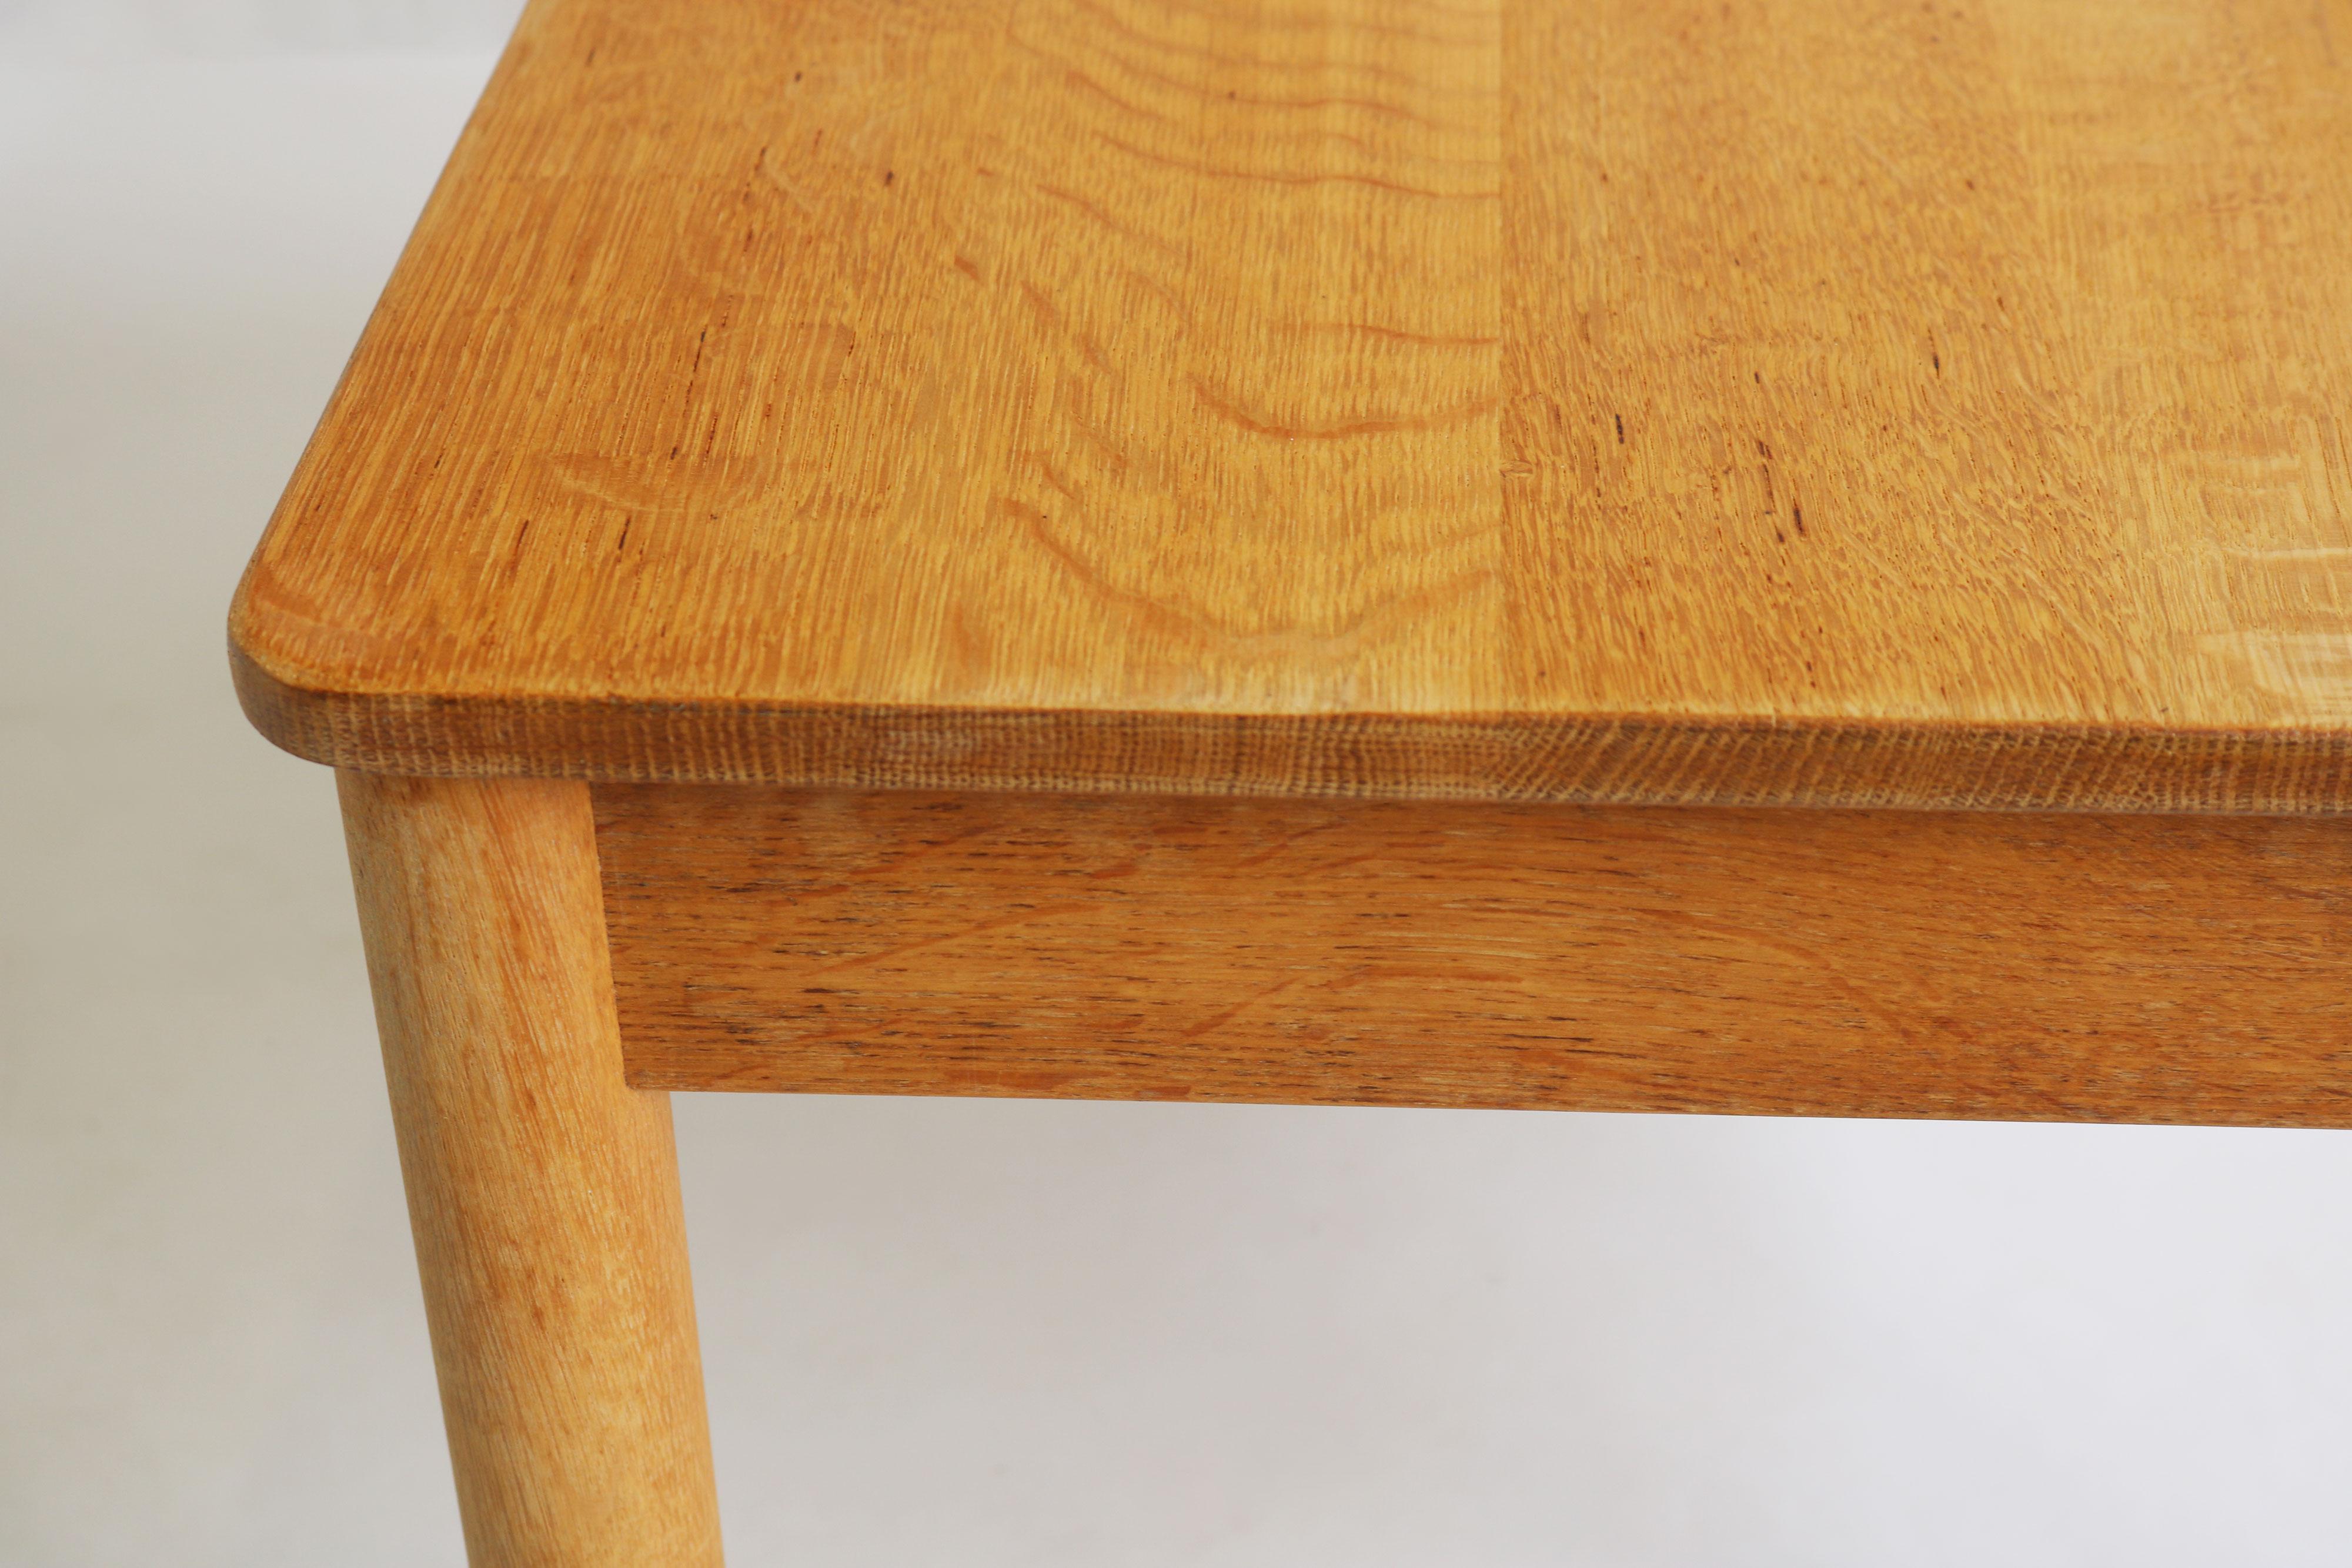 Oak Solid oak coffee table Model: 5350 by Borge Mogensen 1950 Shaker syle side table For Sale